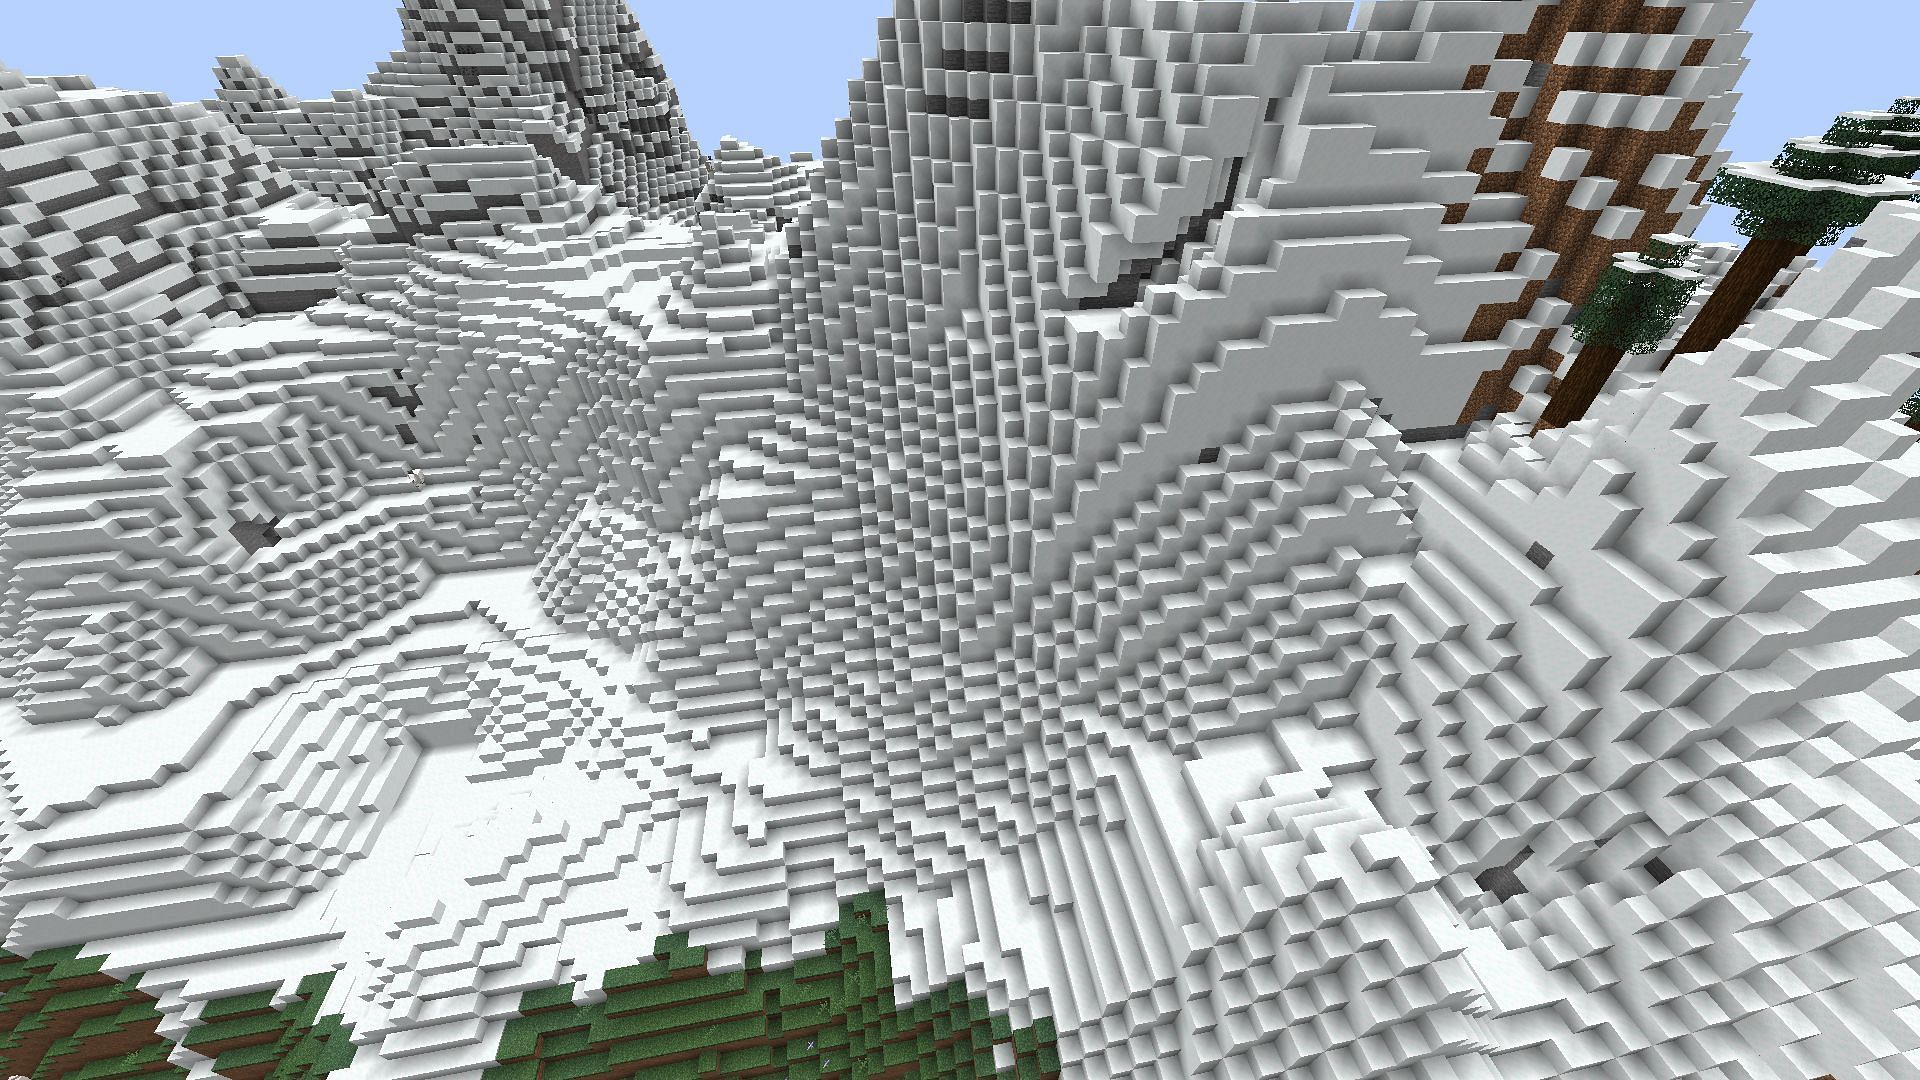 Snowy slopes biome in Minecraft 1.18 update (Image via Minecraft Wiki)